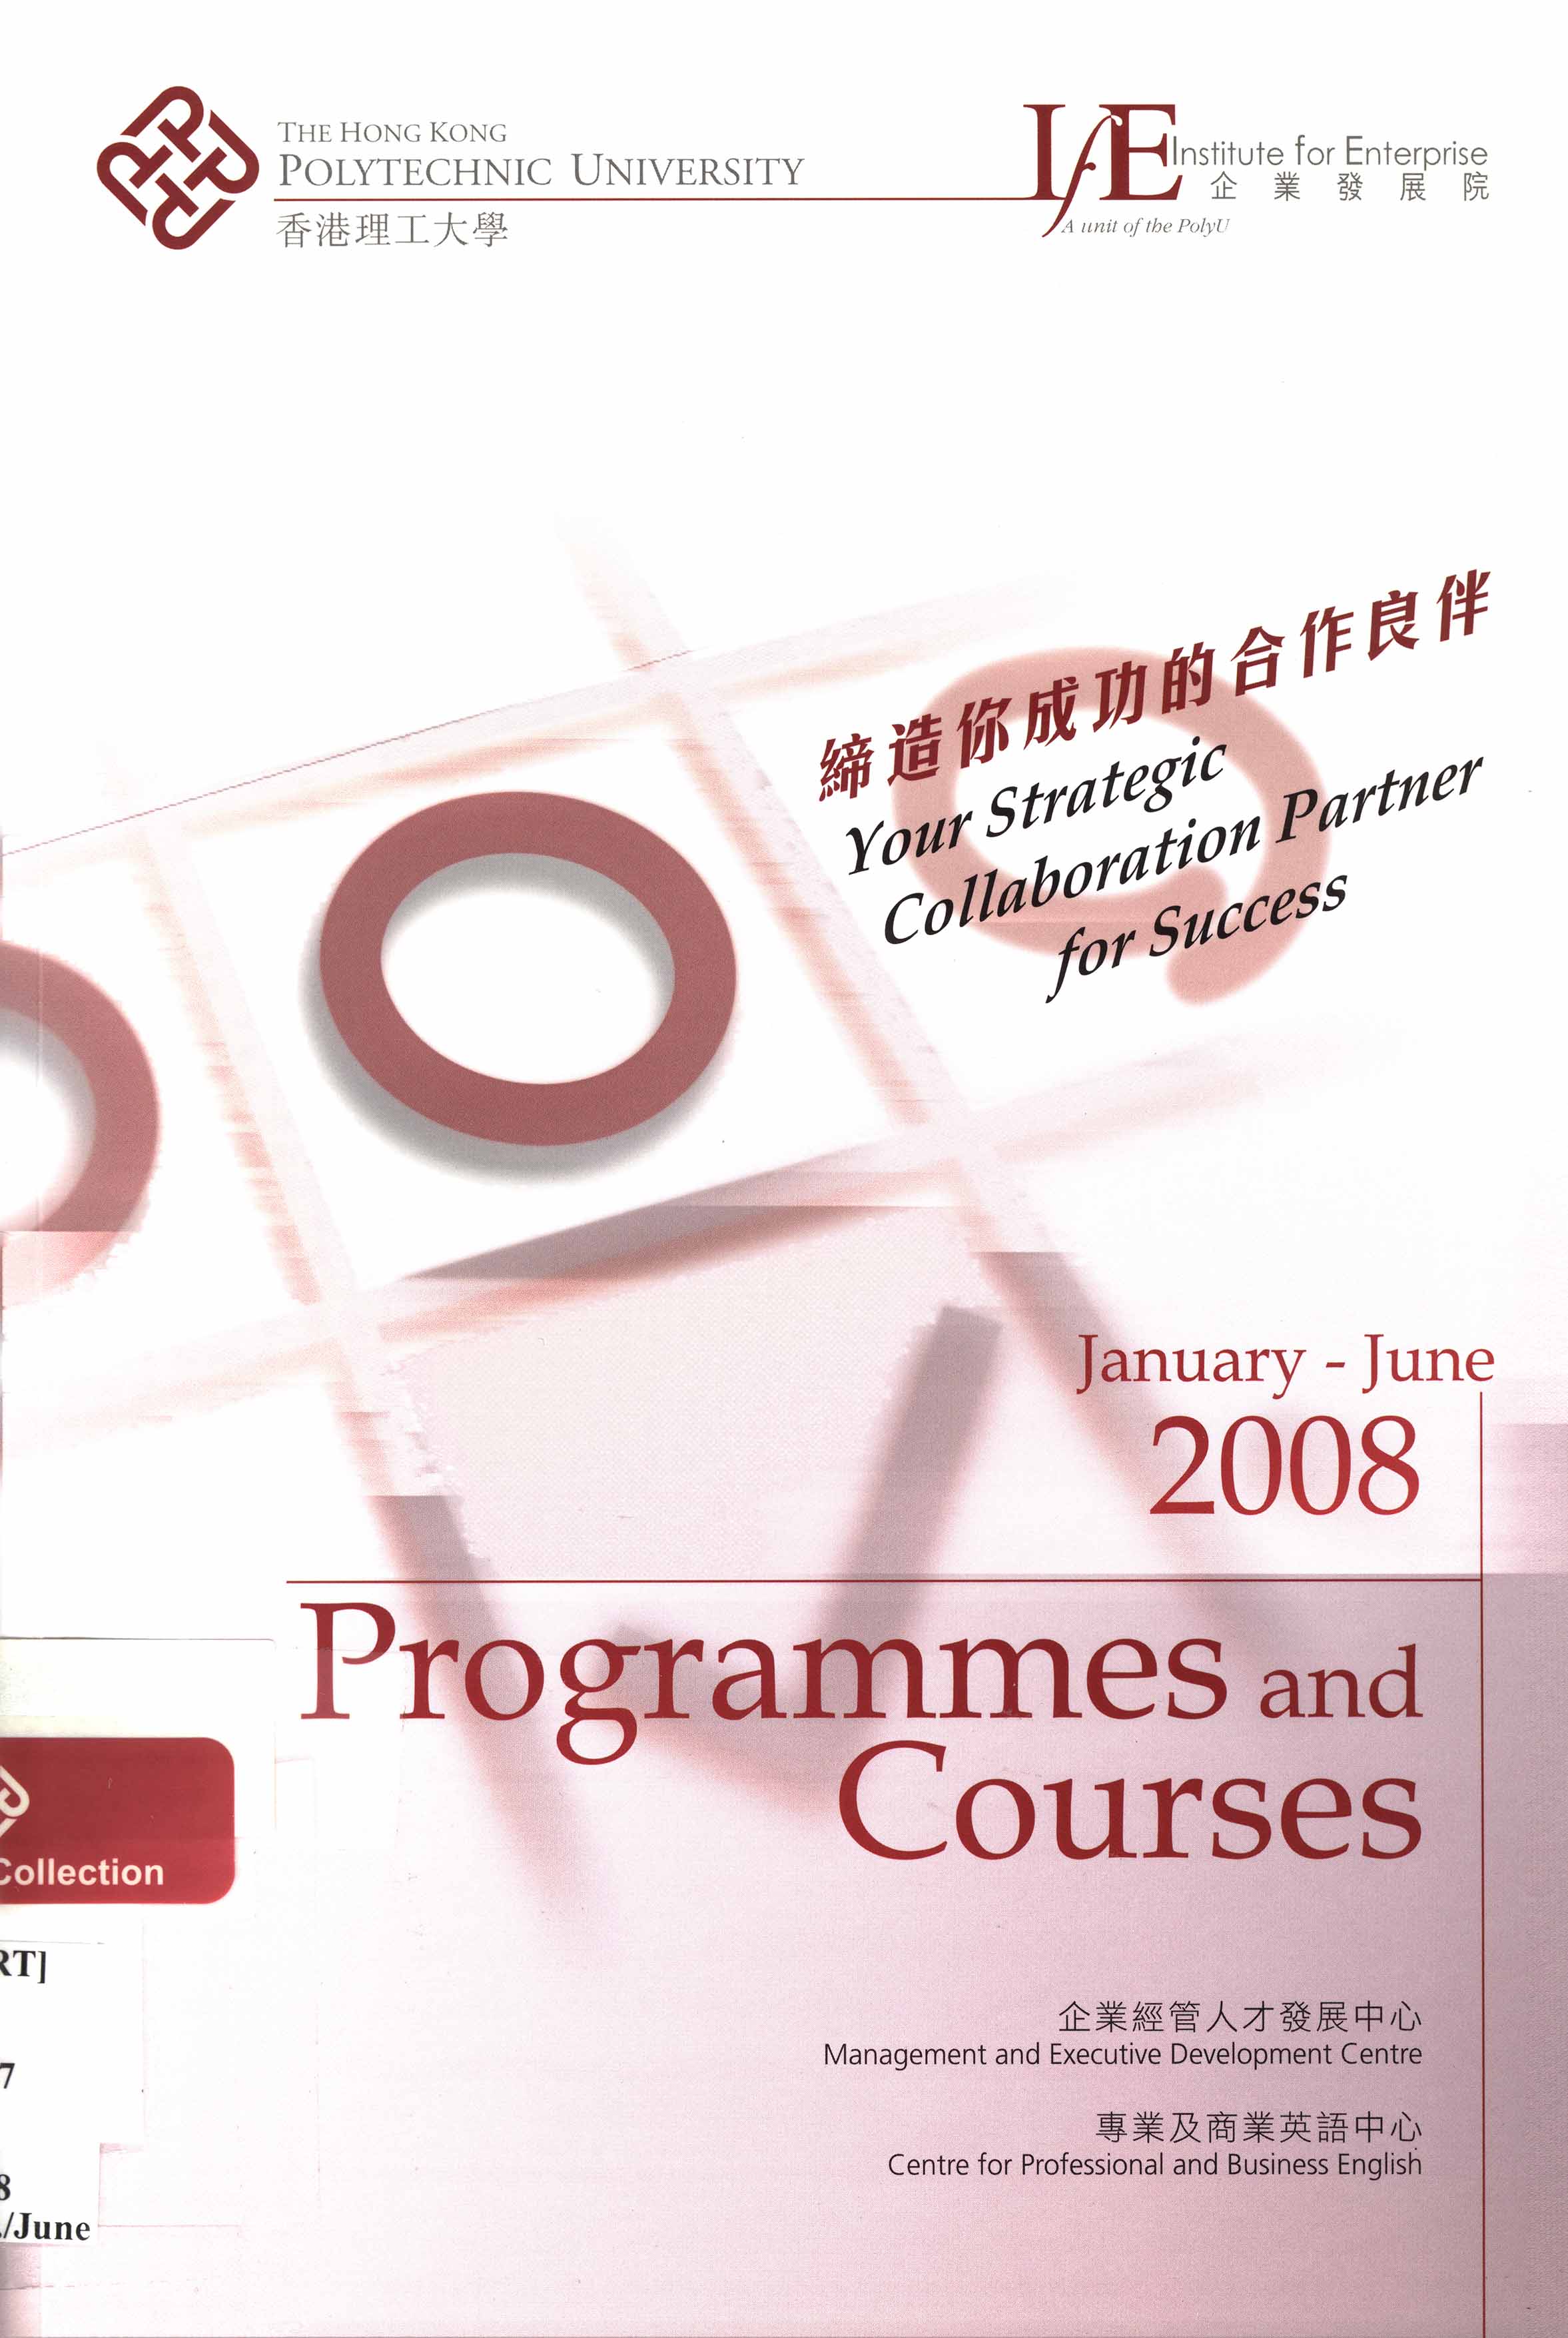 Institute for Enterprise: programmes and courses. Jan-June 2008